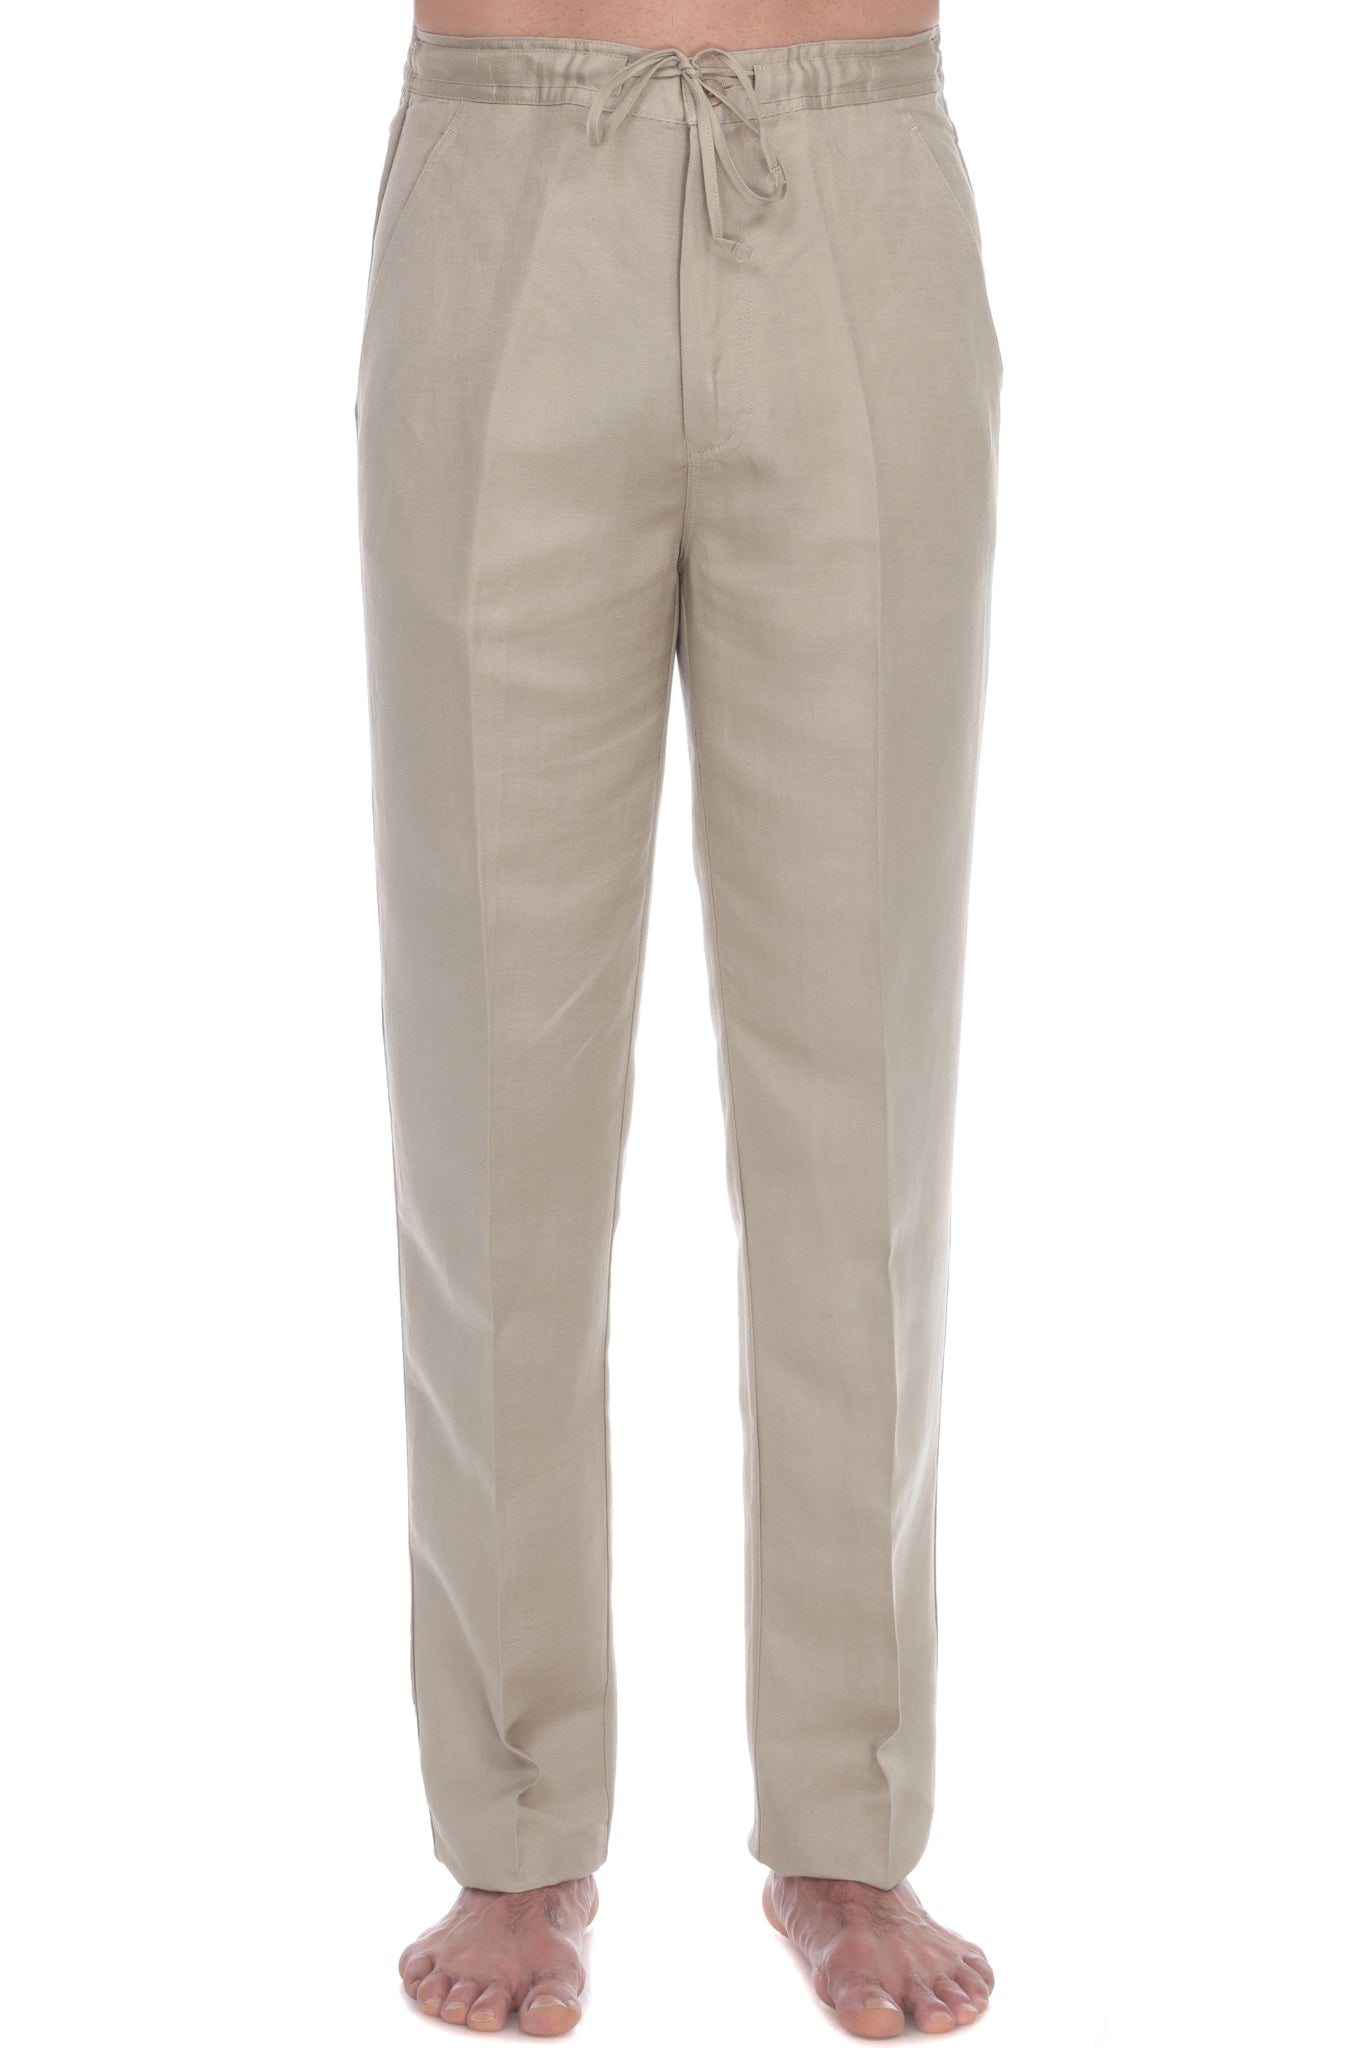 Mojito Collection Men's Casual Drawstring Linen Pants